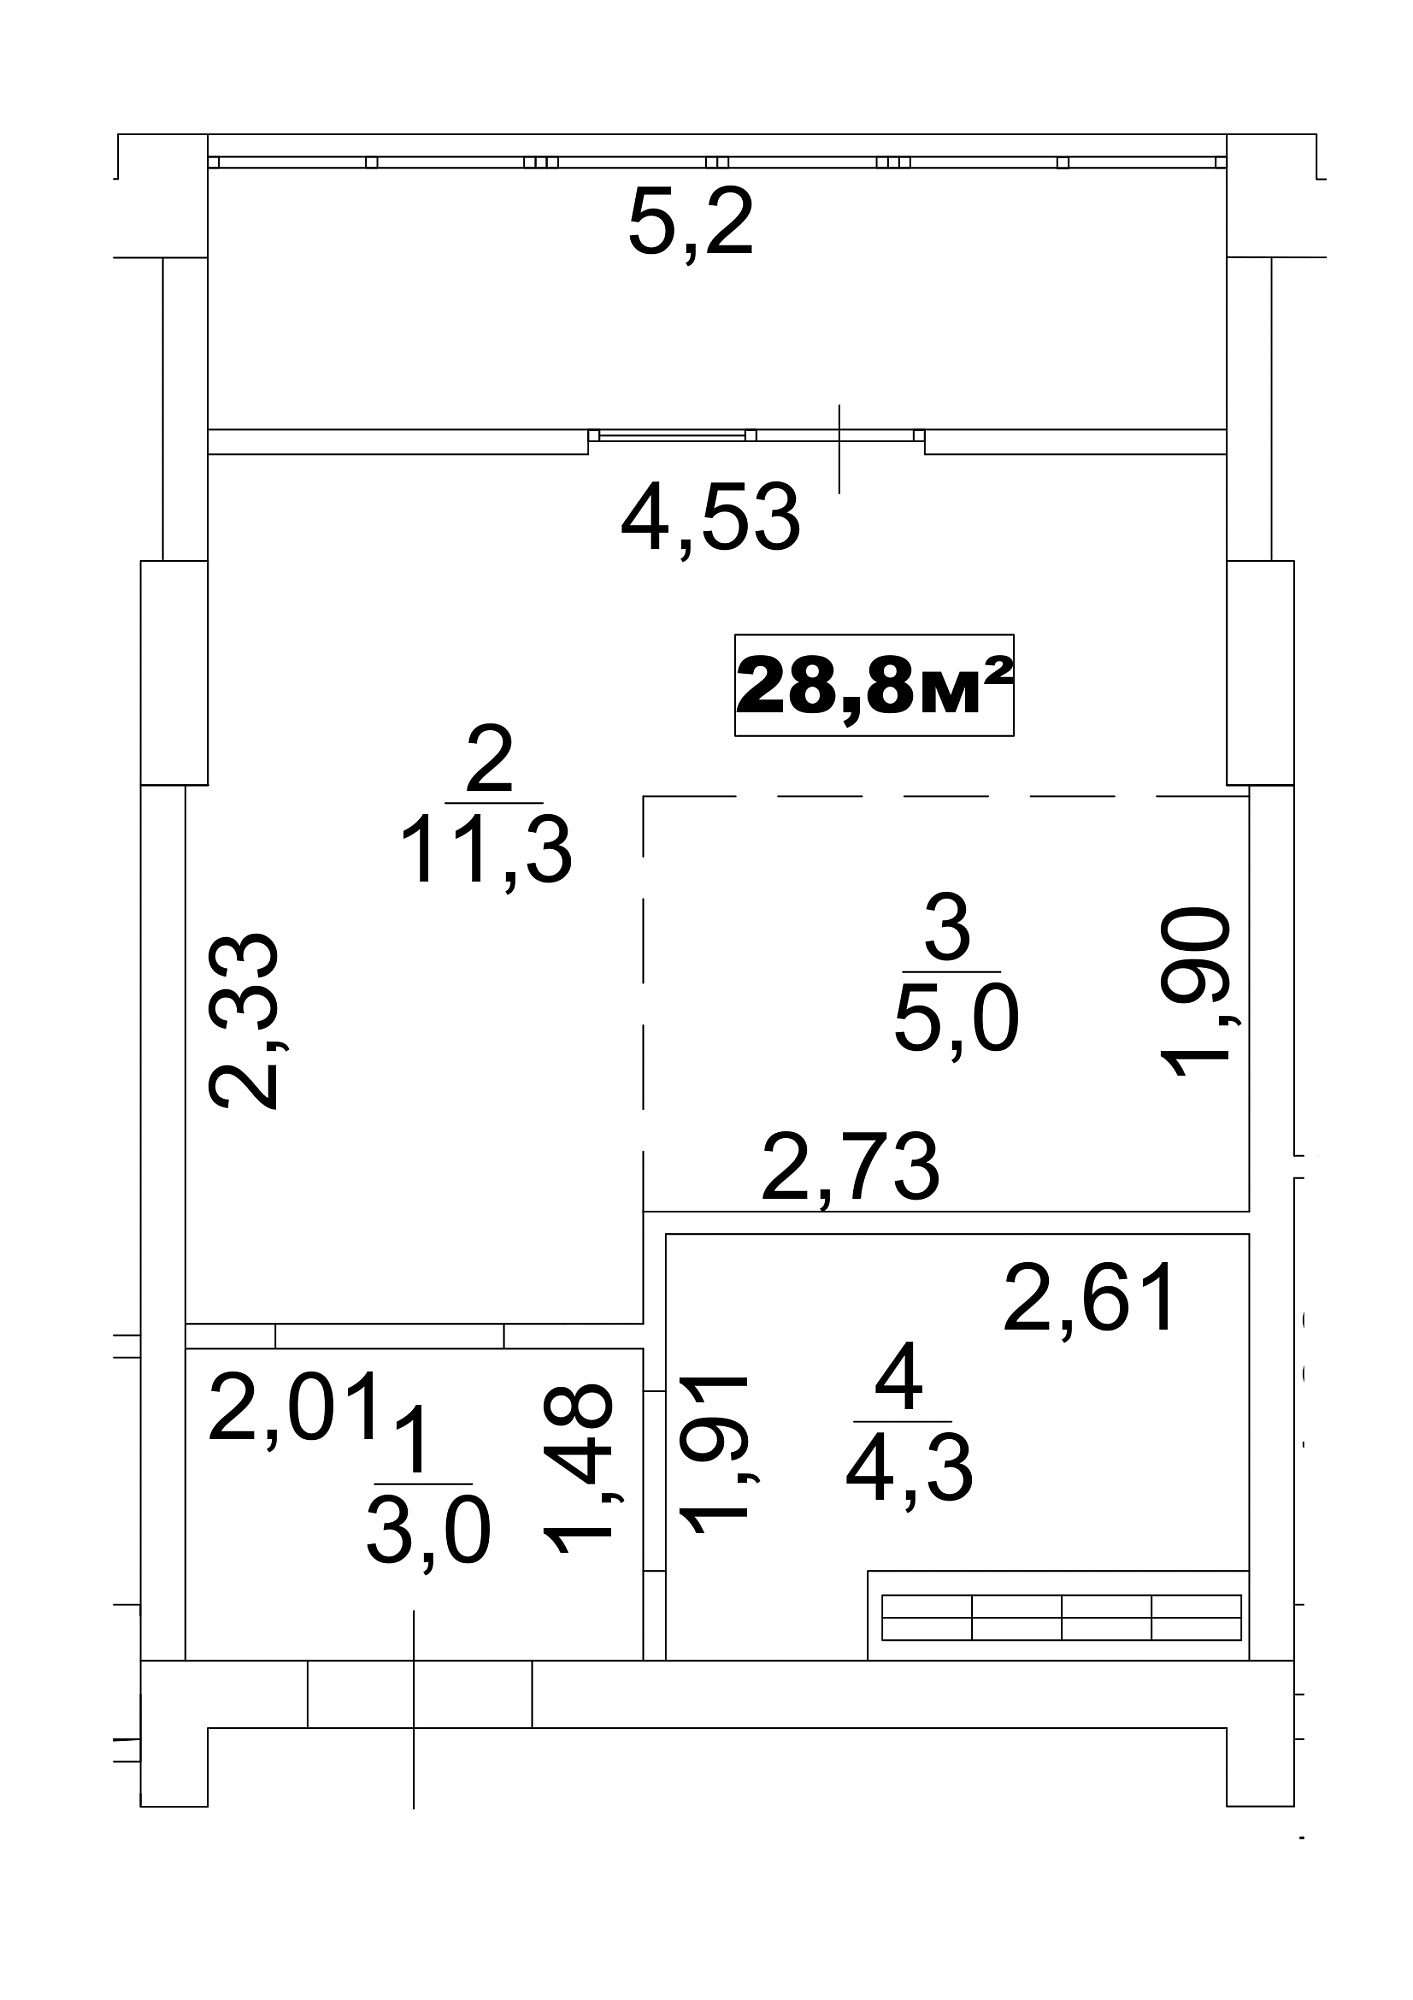 Planning Smart flats area 28.8m2, AB-13-10/00083.